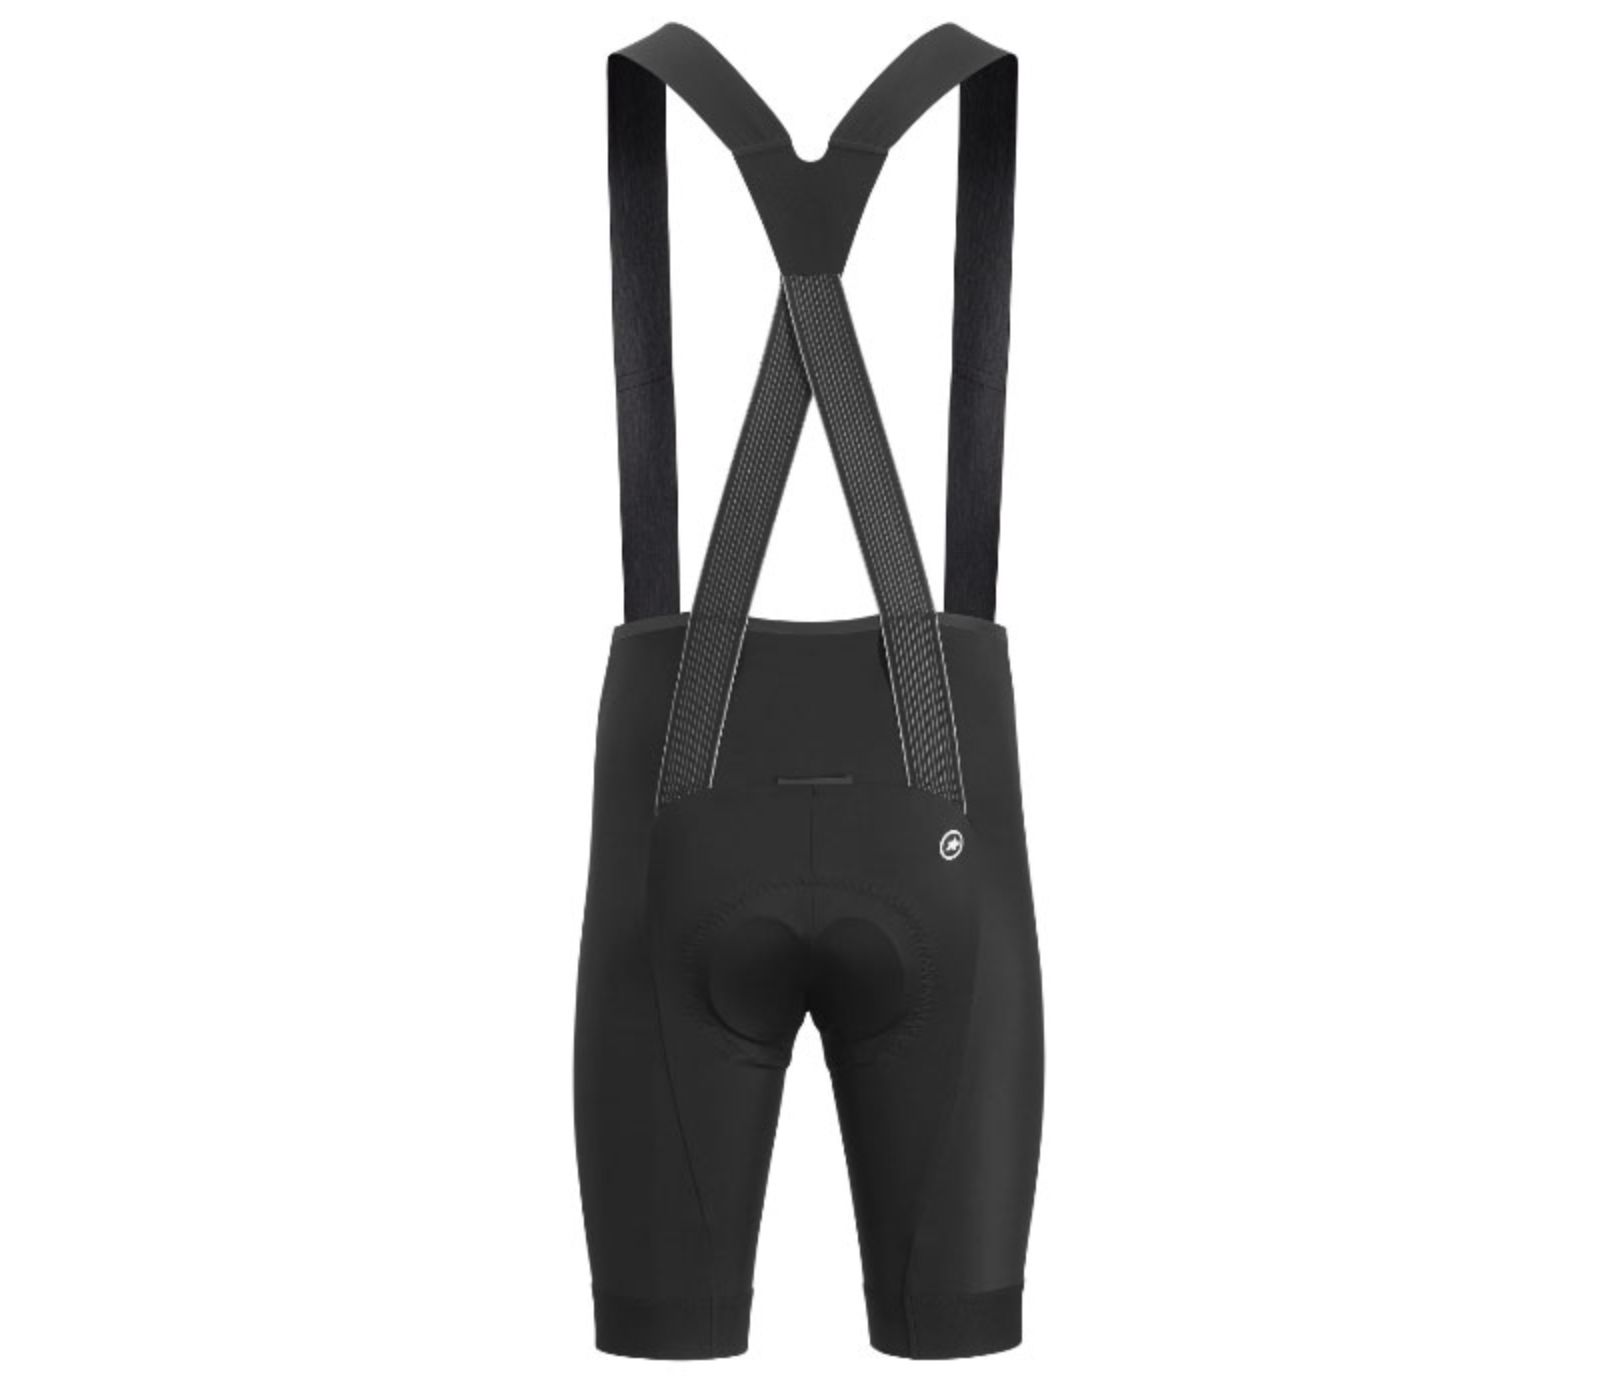 Assos Men's Black Equipe RS S9 Bib Shorts 